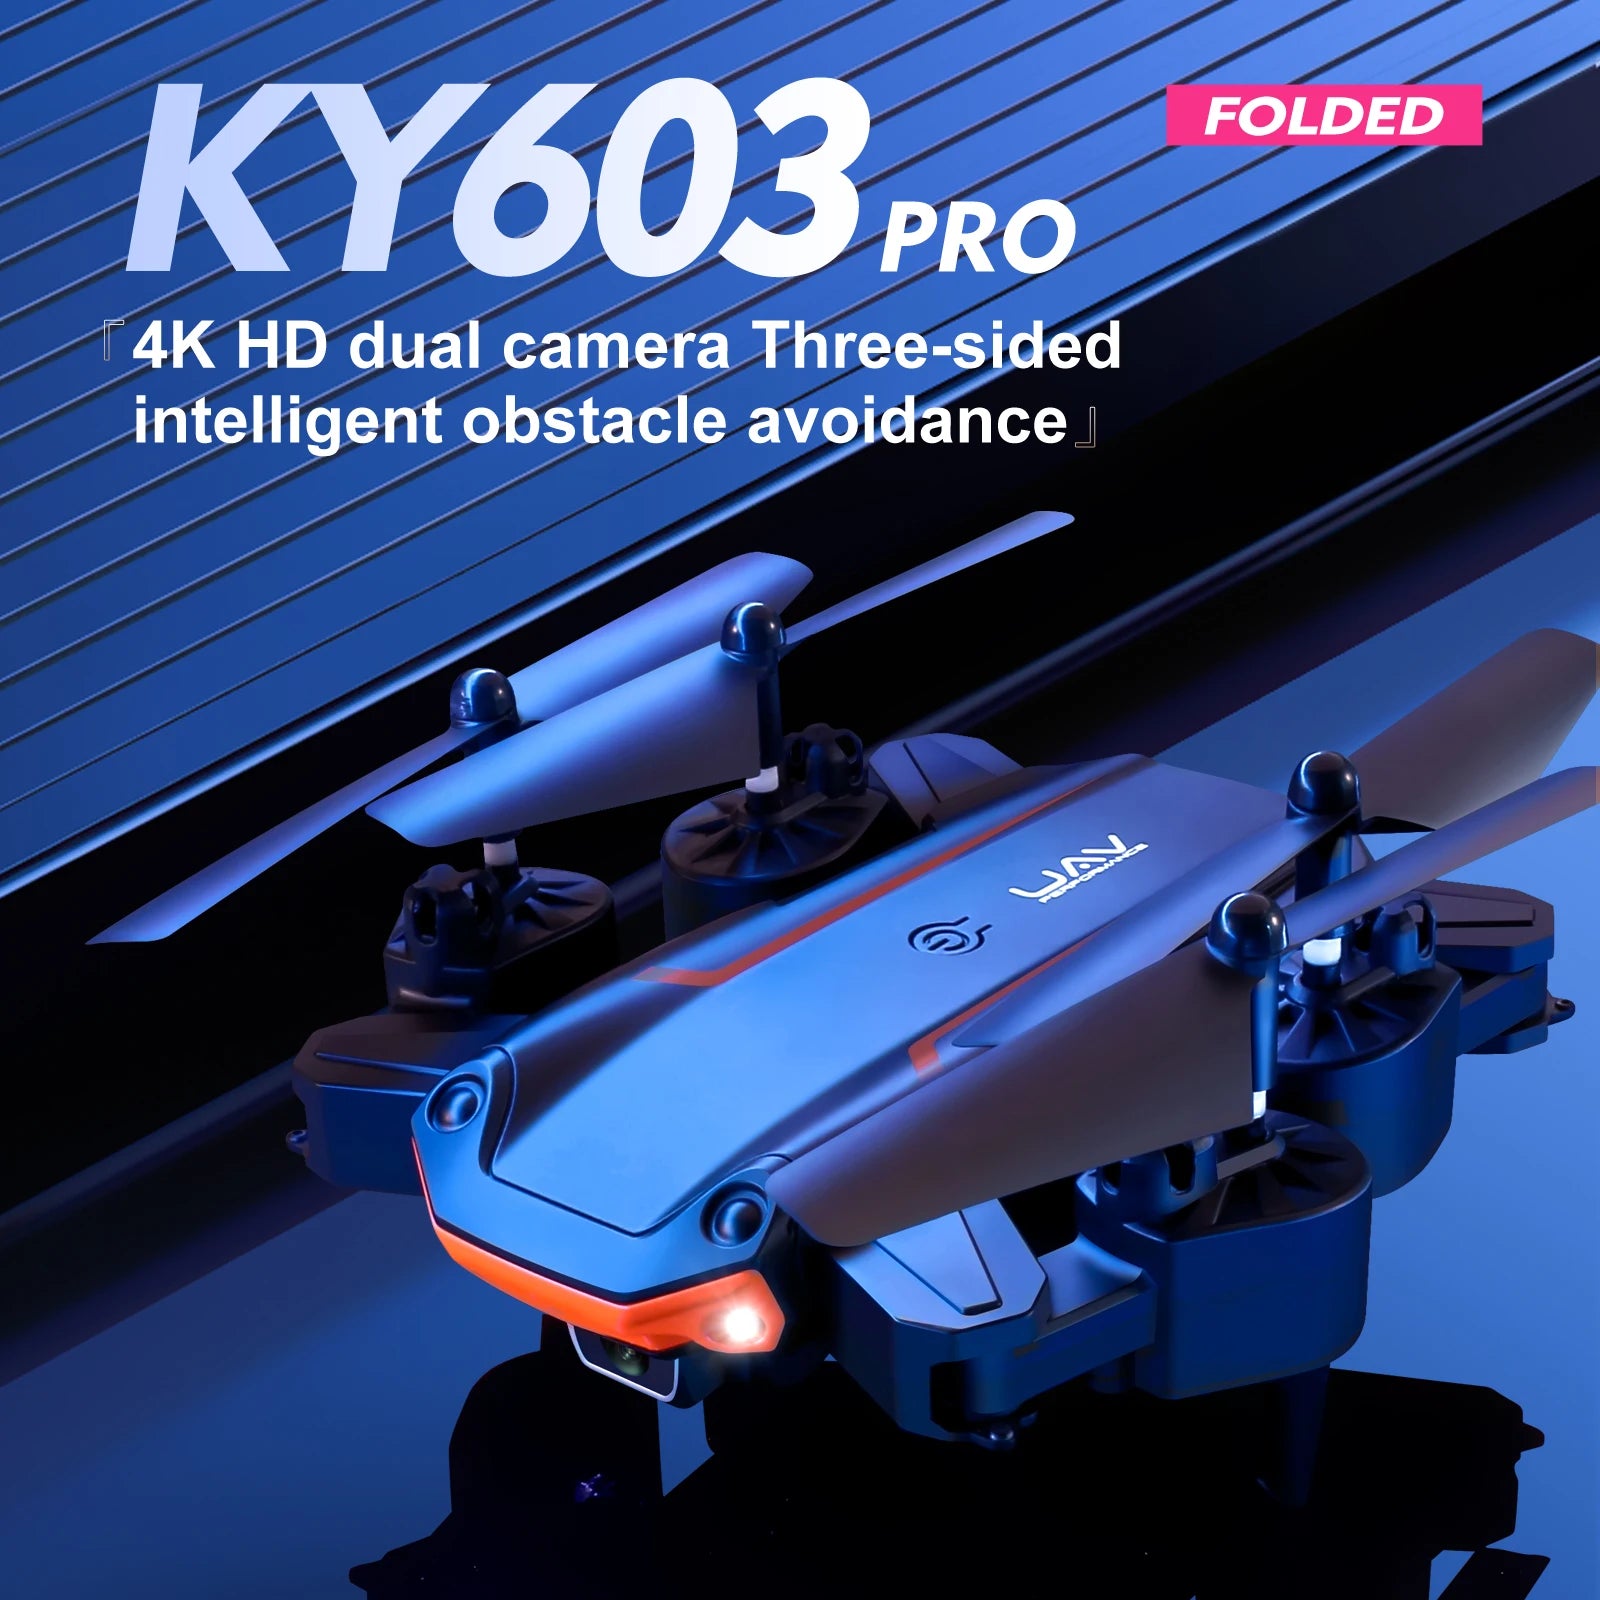 XYRC New KY603 Mini Drone, ky603 pro 4k hd dual camera intelligent obstacle